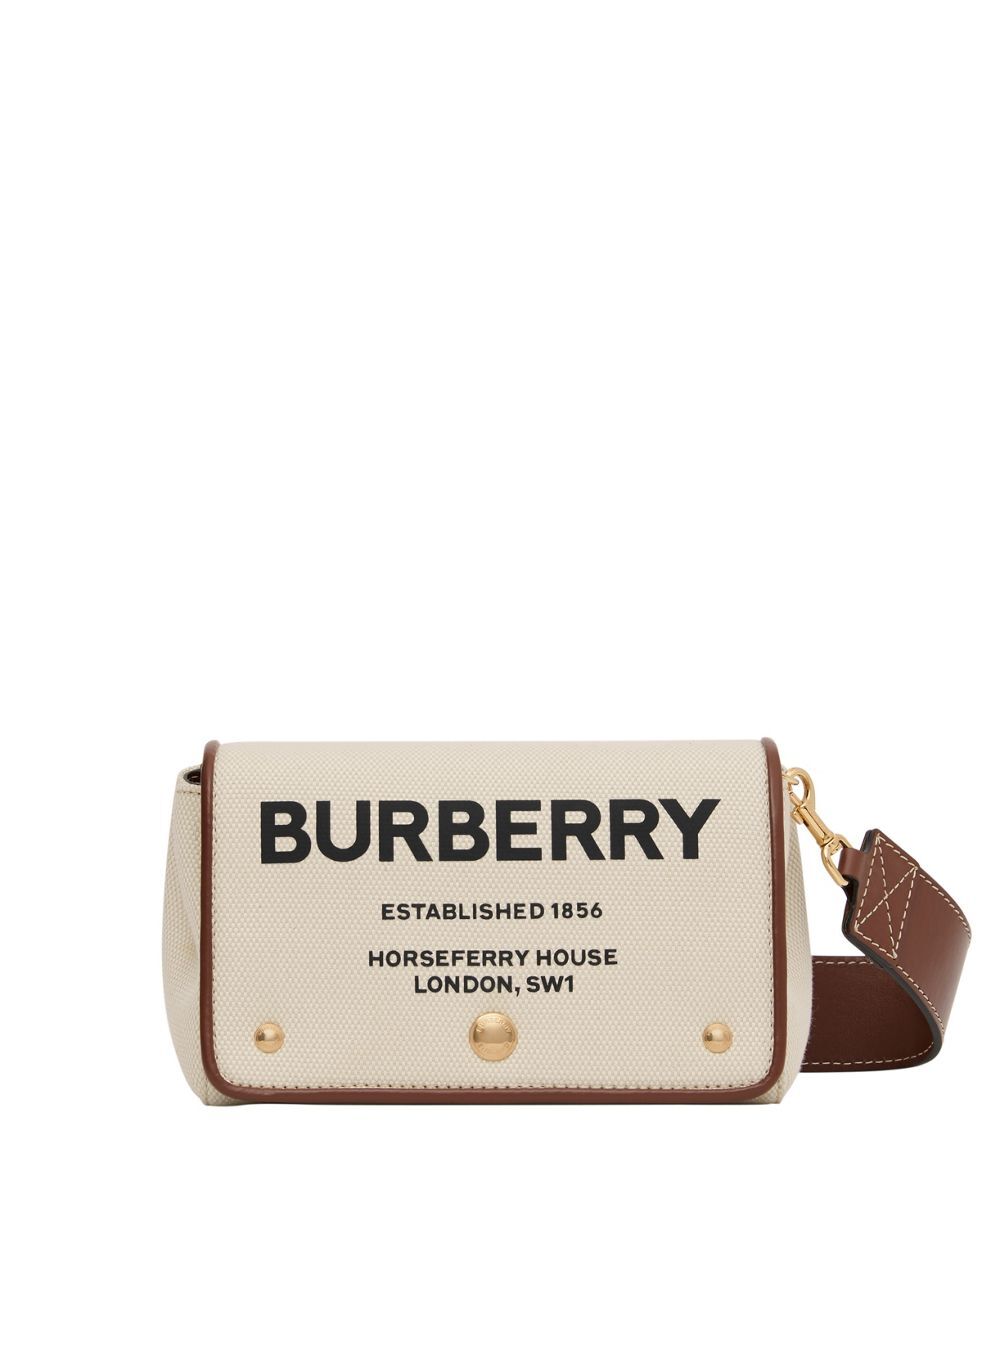 burberry canvas crossbody bag